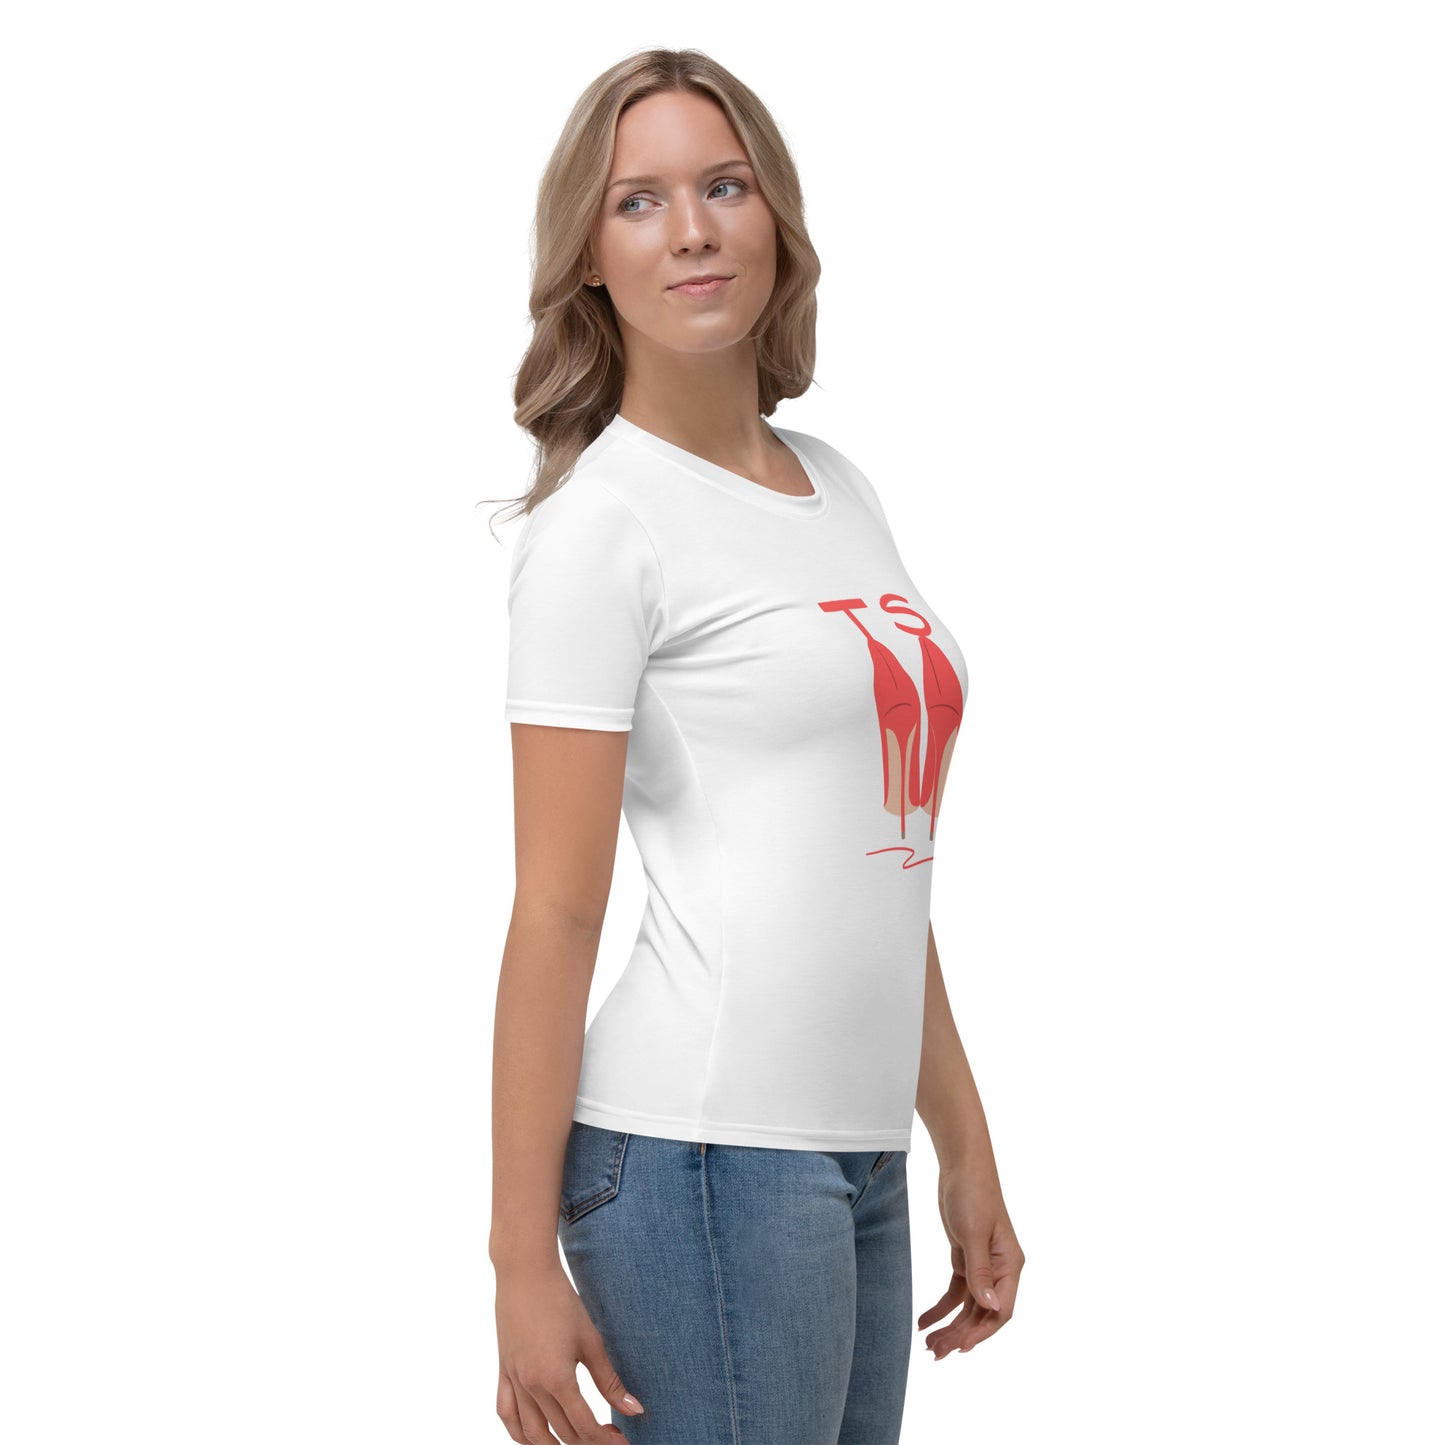 "Tacones Sabios" Women's T-Shirt (Wide Front)